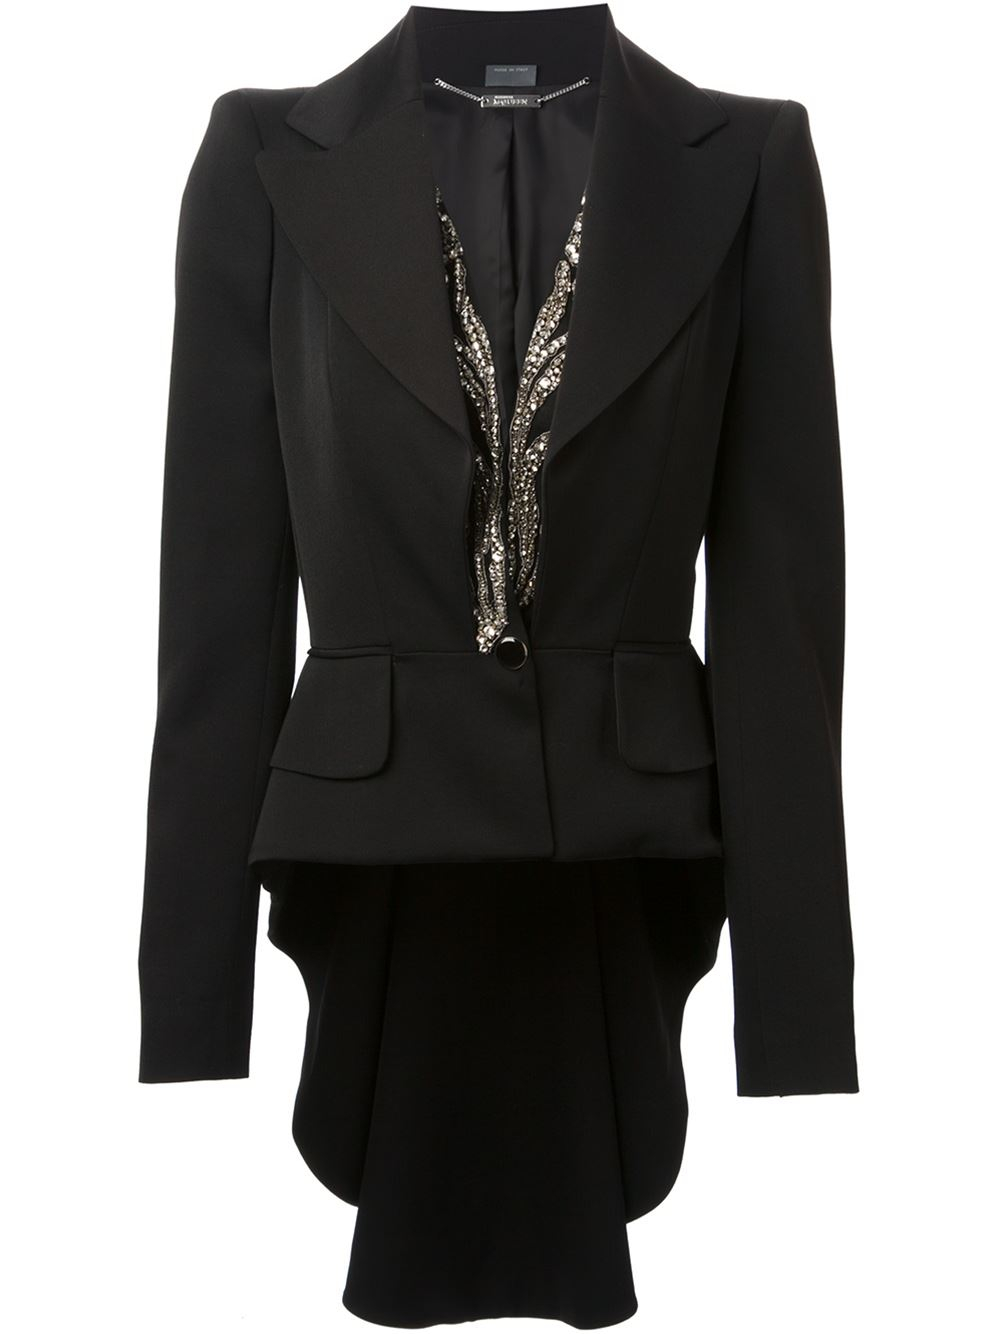 Alexander mcqueen Embellished Tuxedo Jacket in Black | Lyst